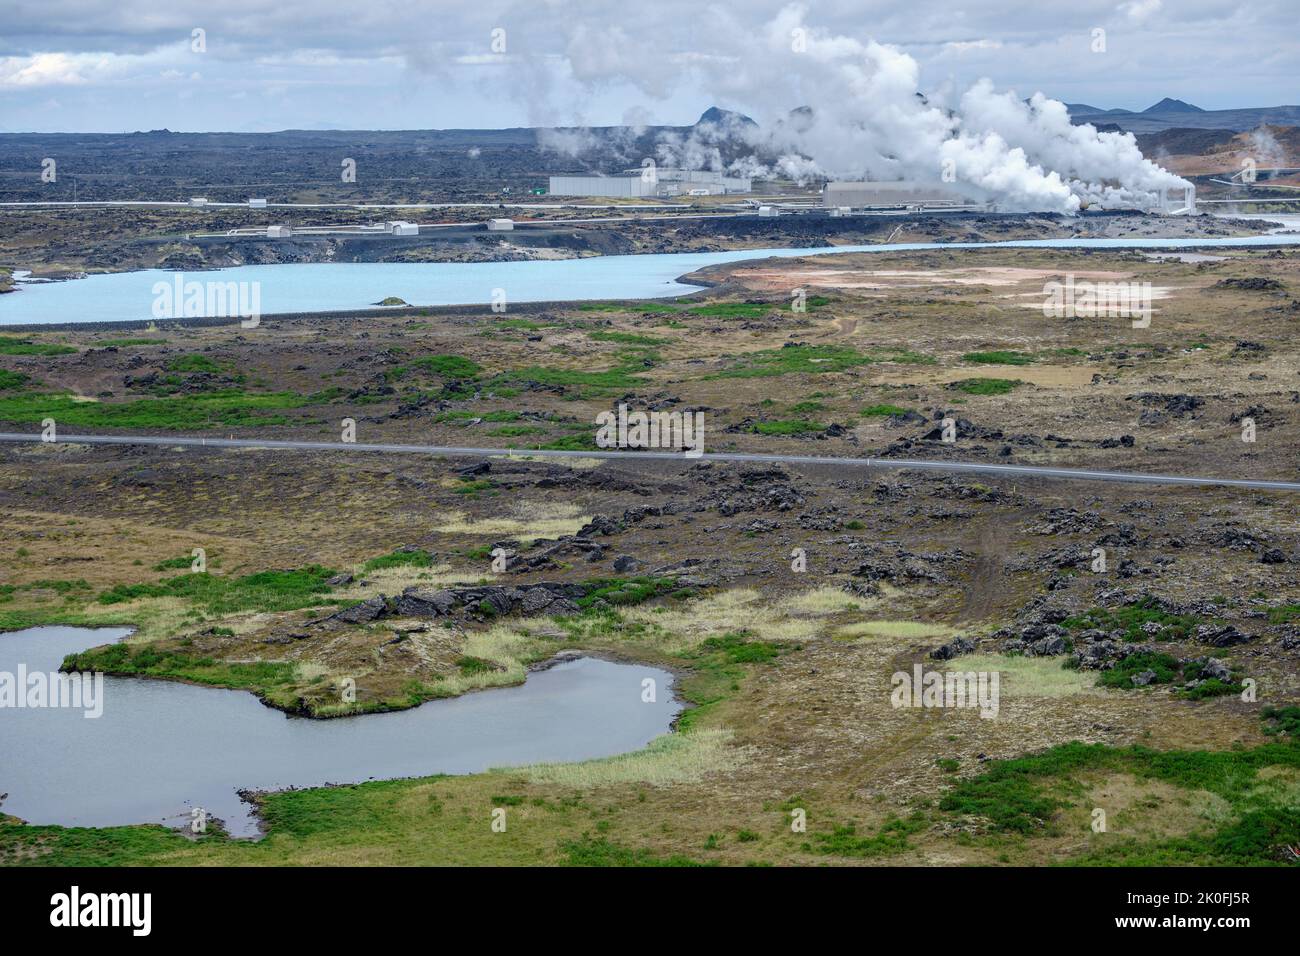 Centrale géothermique de Reykjanes, péninsule de Reykjanes, Islande Banque D'Images